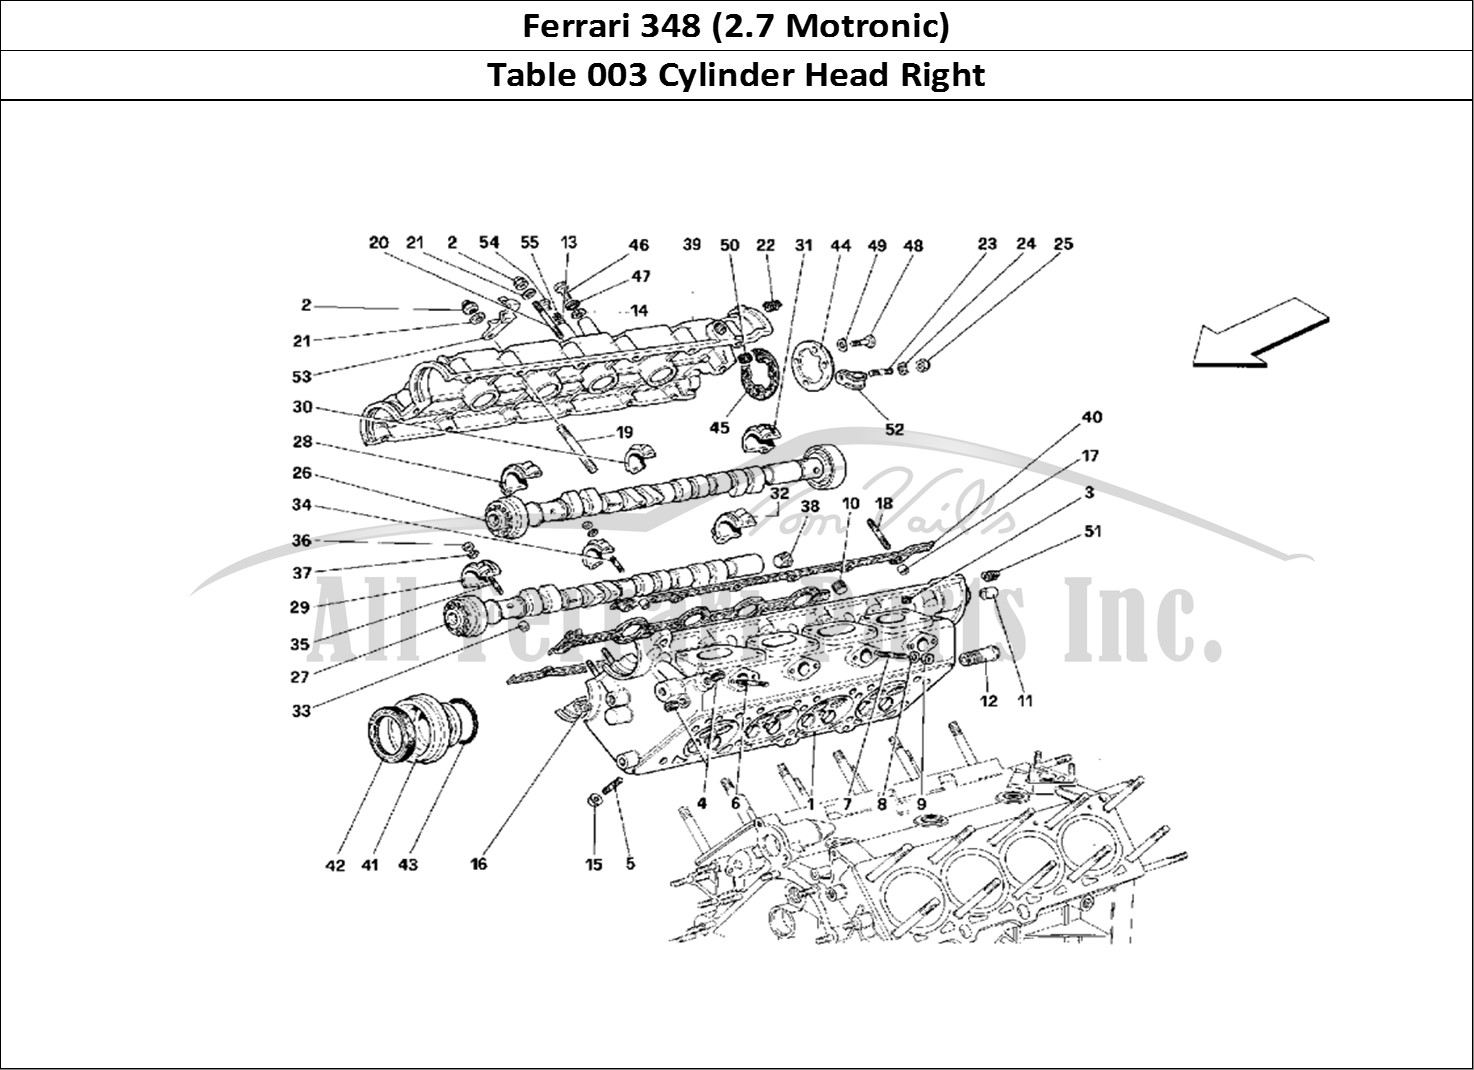 Ferrari Parts Ferrari 348 (2.7 Motronic) Page 003 R.H. Cylinder Head